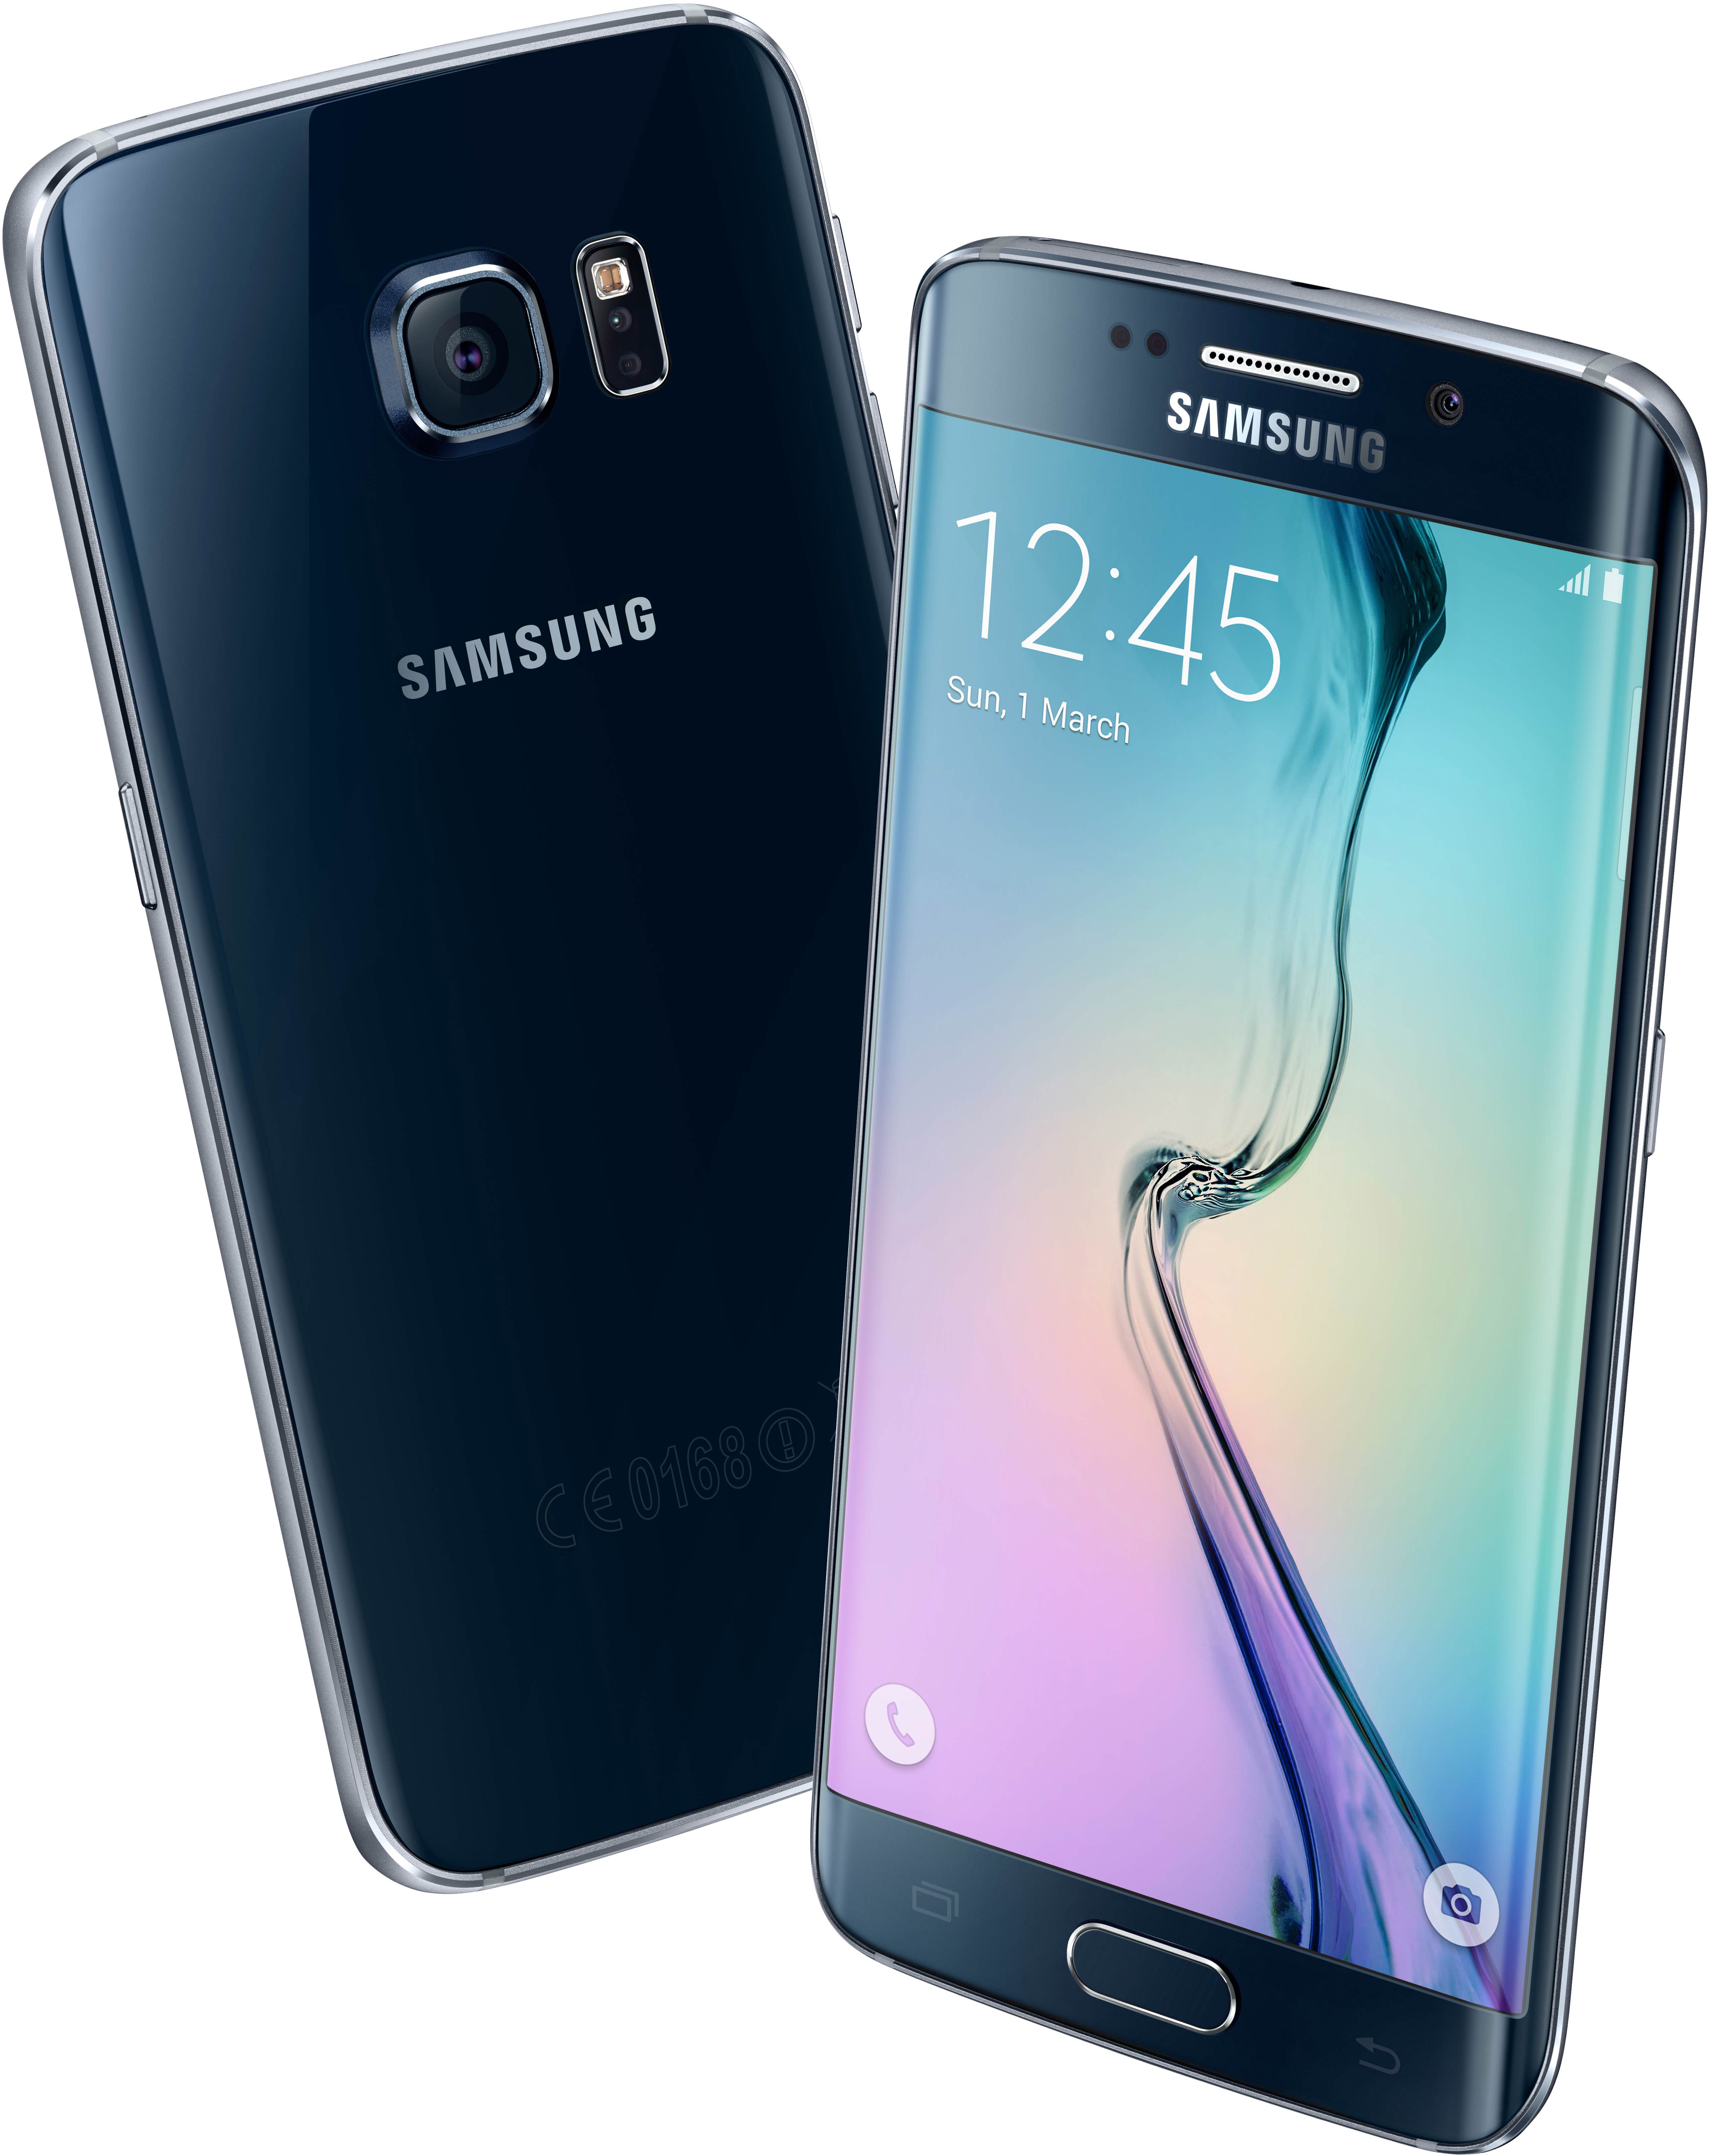 Год выпуска самсунг галакси. Самсунг галакси с6 эйдж. Самсунг галакси s6 Edge. Samsung SM-g925f. Samsung Galaxy s6 Edge 64gb.